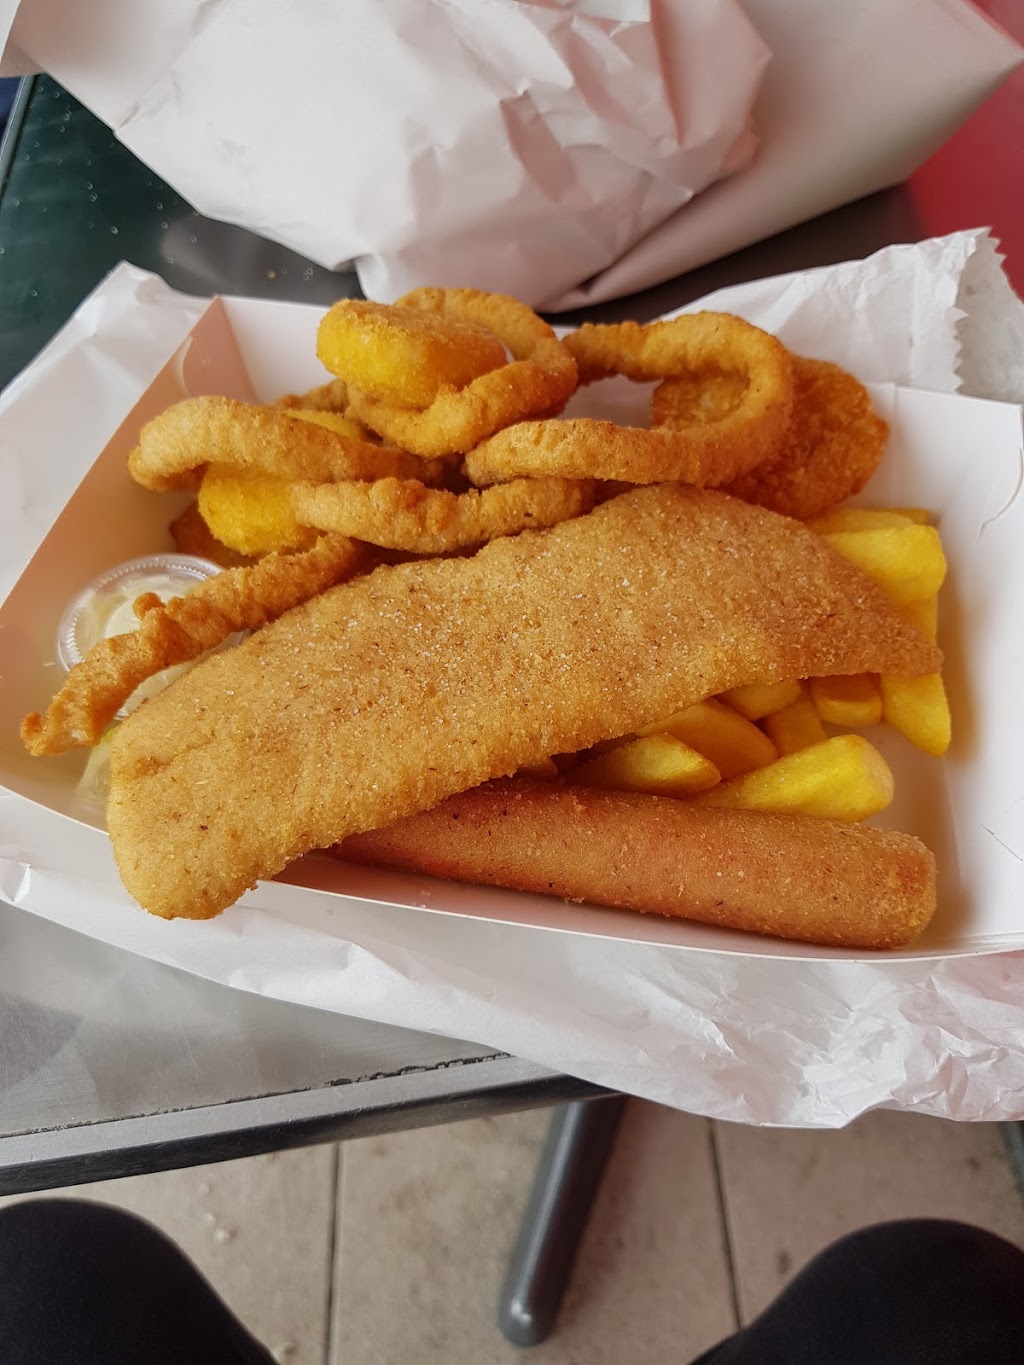 Corner House Fish & Chips | restaurant | 212 Preston Rd, Manly West QLD 4179, Australia | 0733964884 OR +61 7 3396 4884